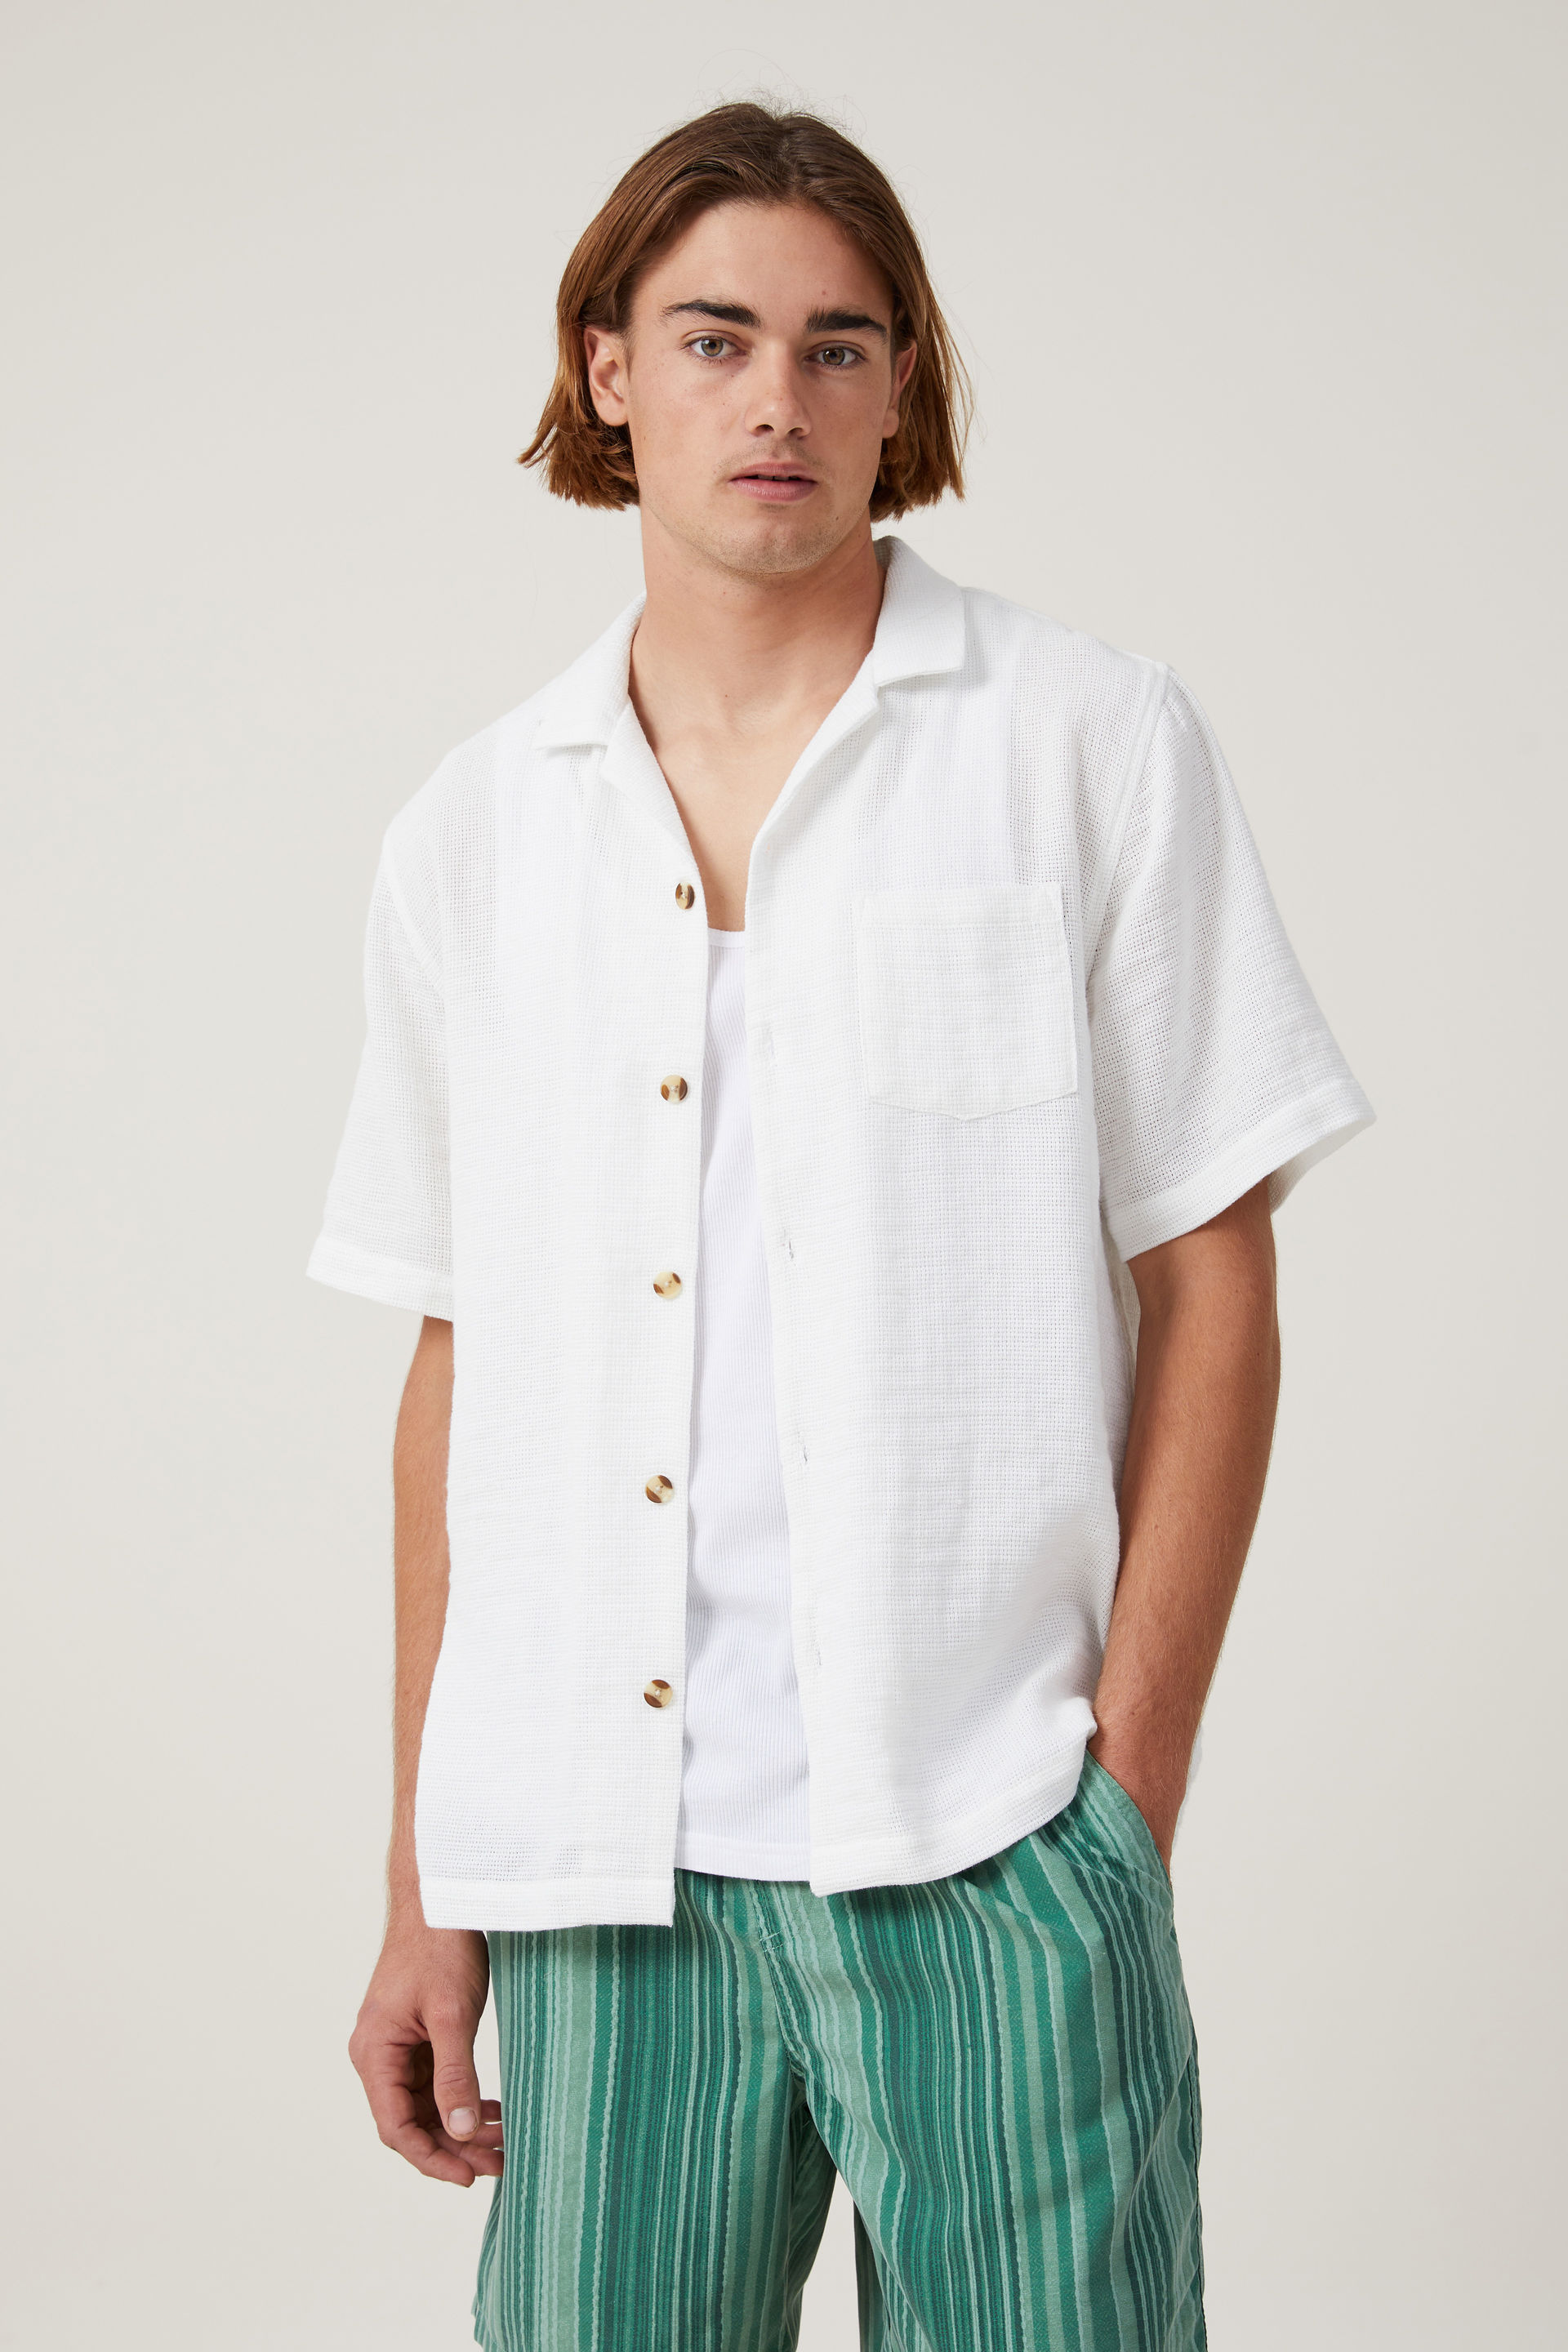 Cotton On Men - Palma Short Sleeve Shirt - White